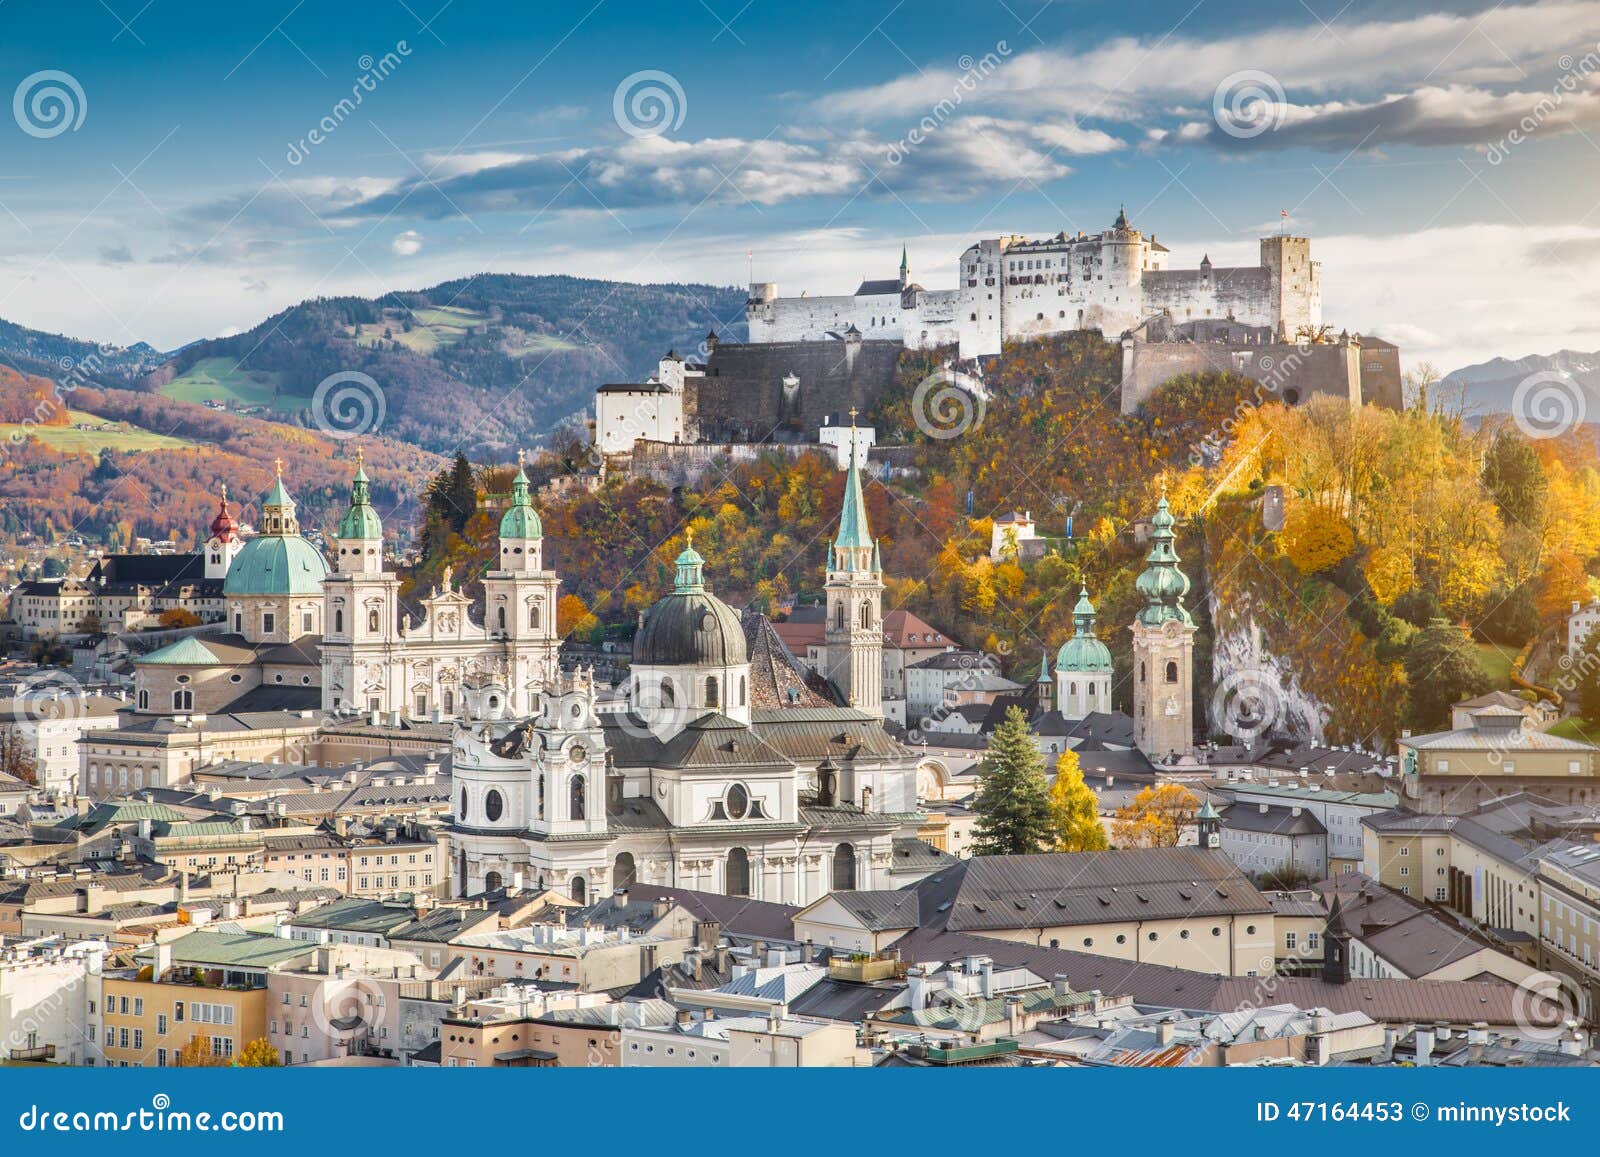 historic city of salzburg in fall, austria